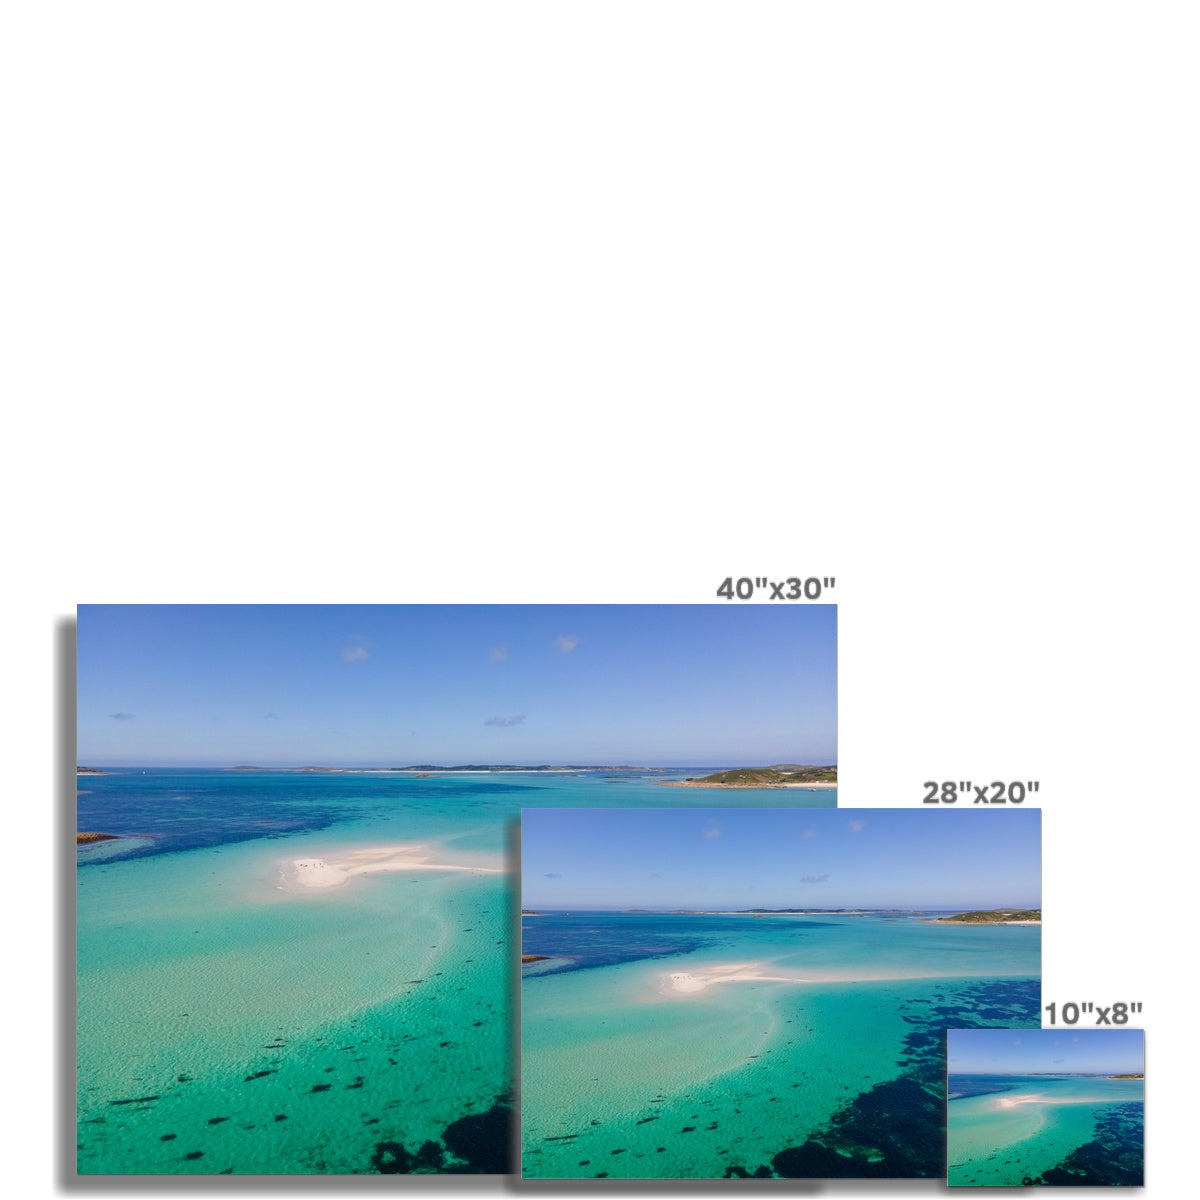 ganilly sandbar picture sizes